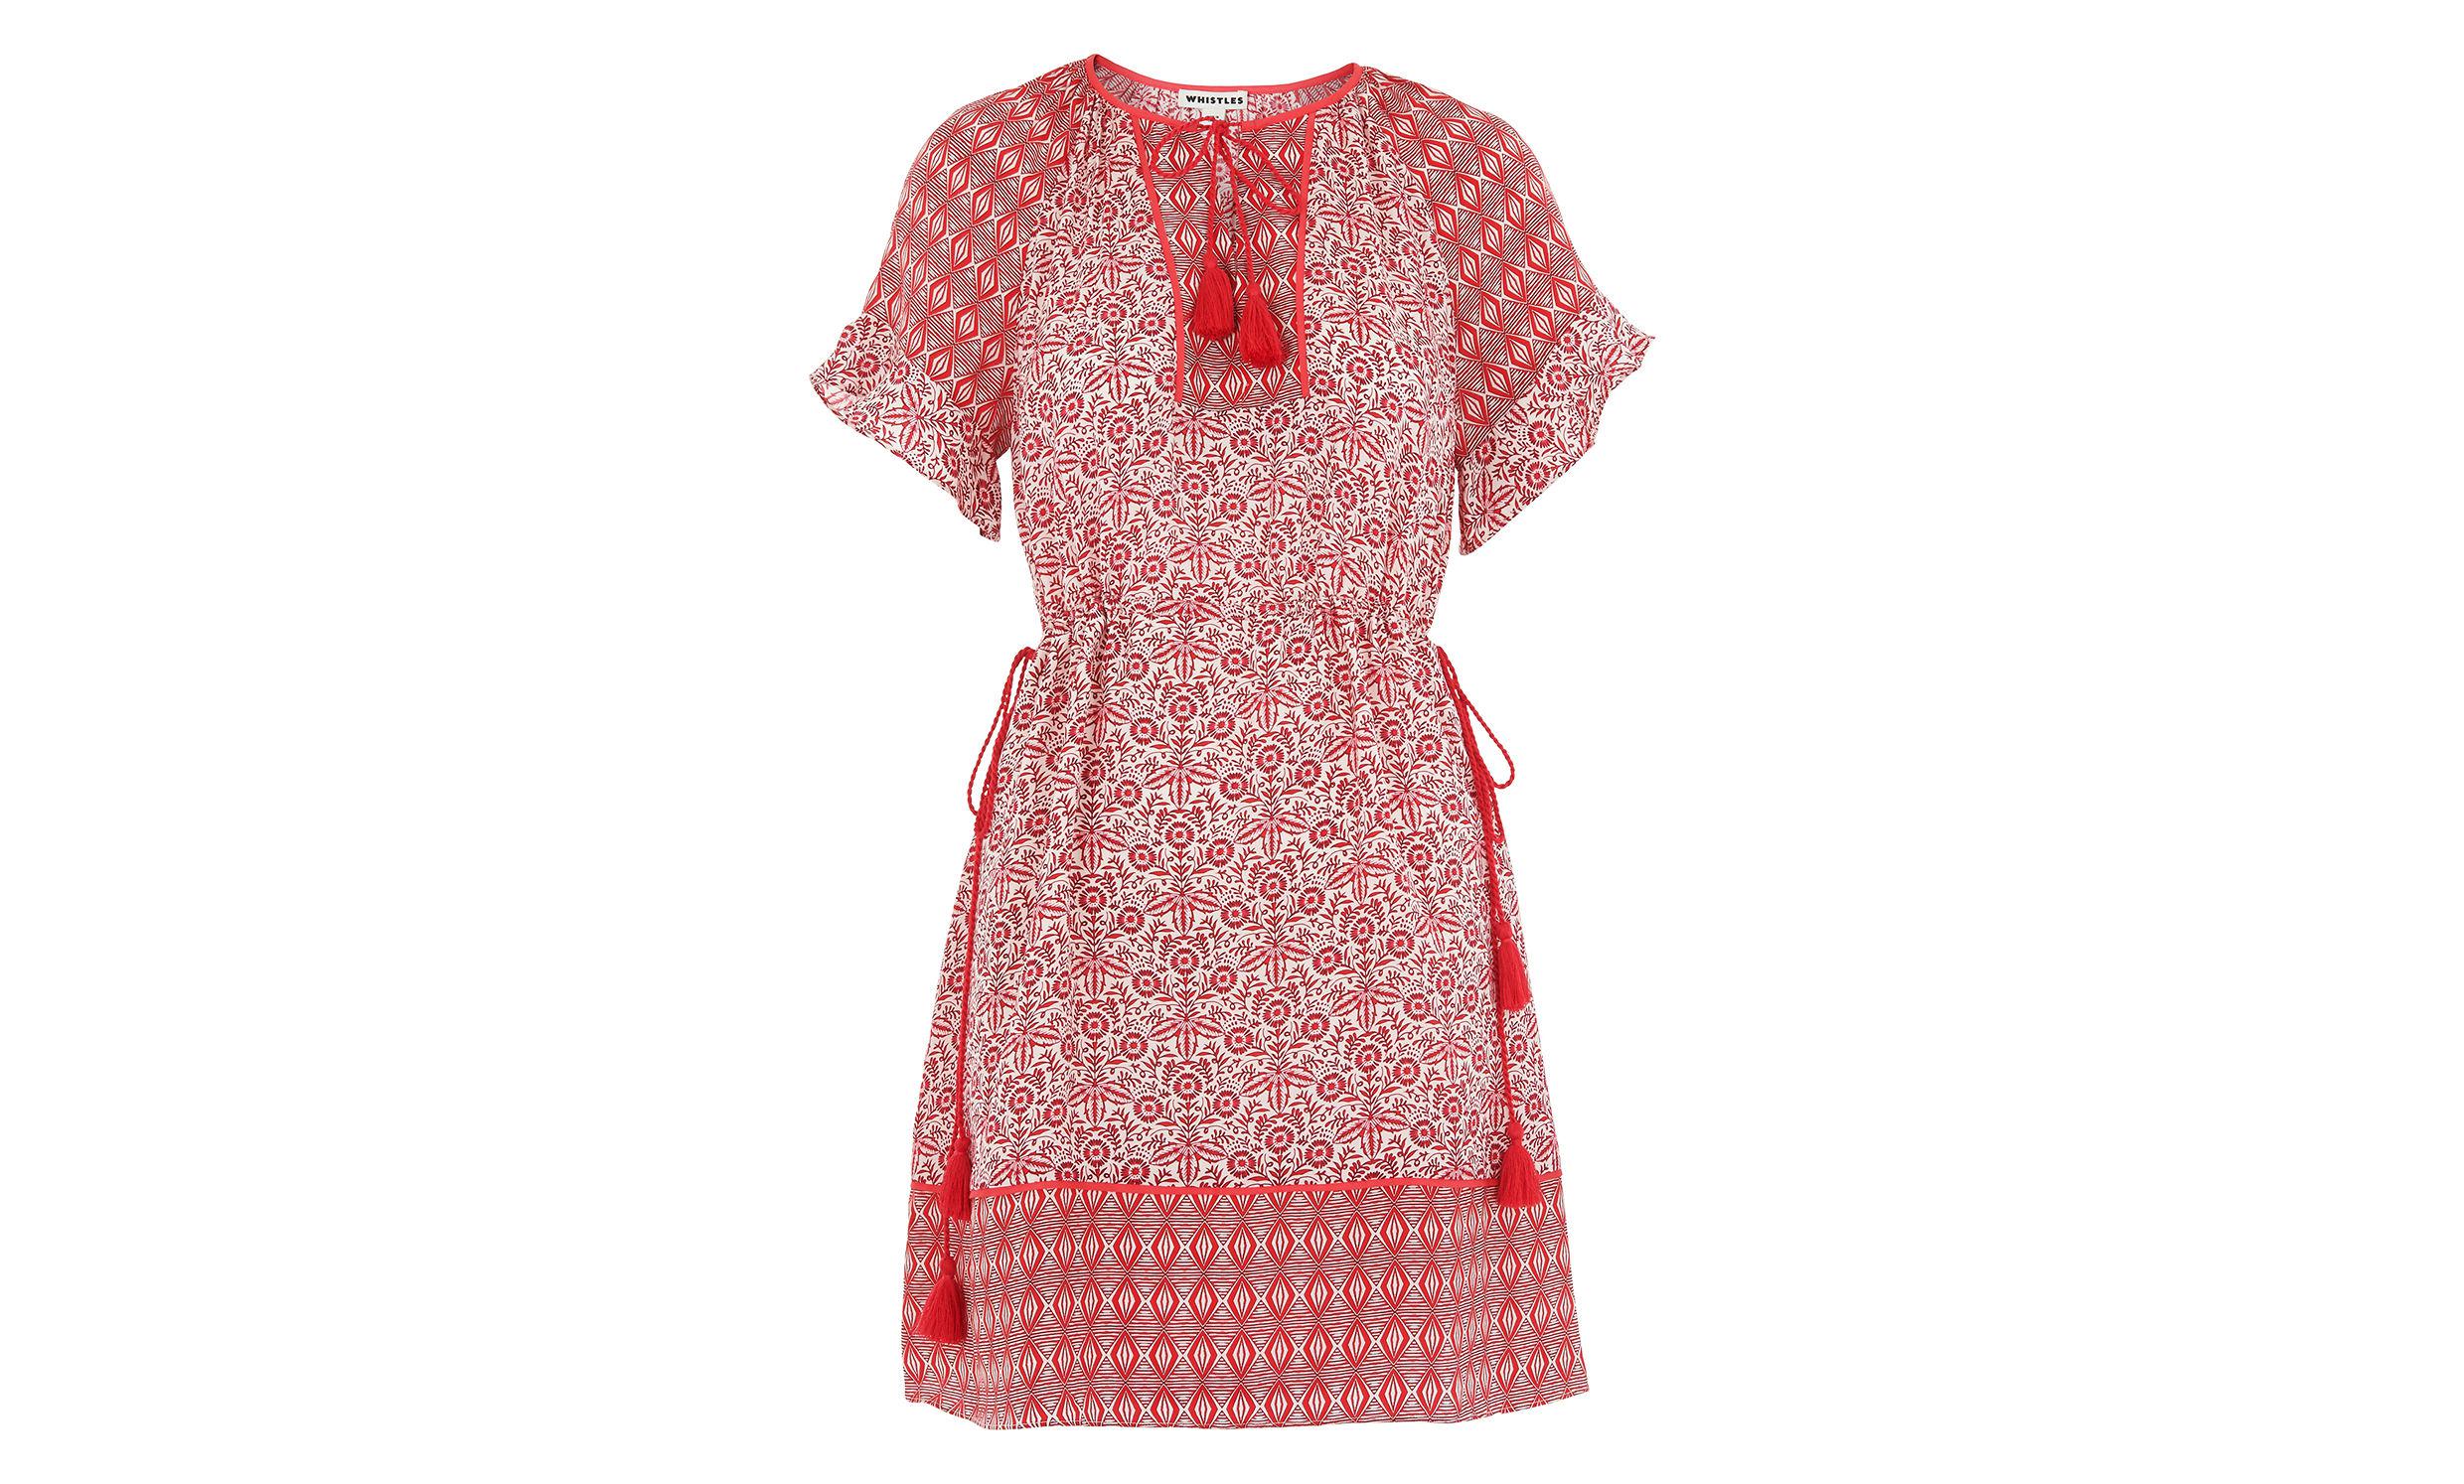 Lyst - Whistles Juana Alisha Print Dress in Pink - Save 89%